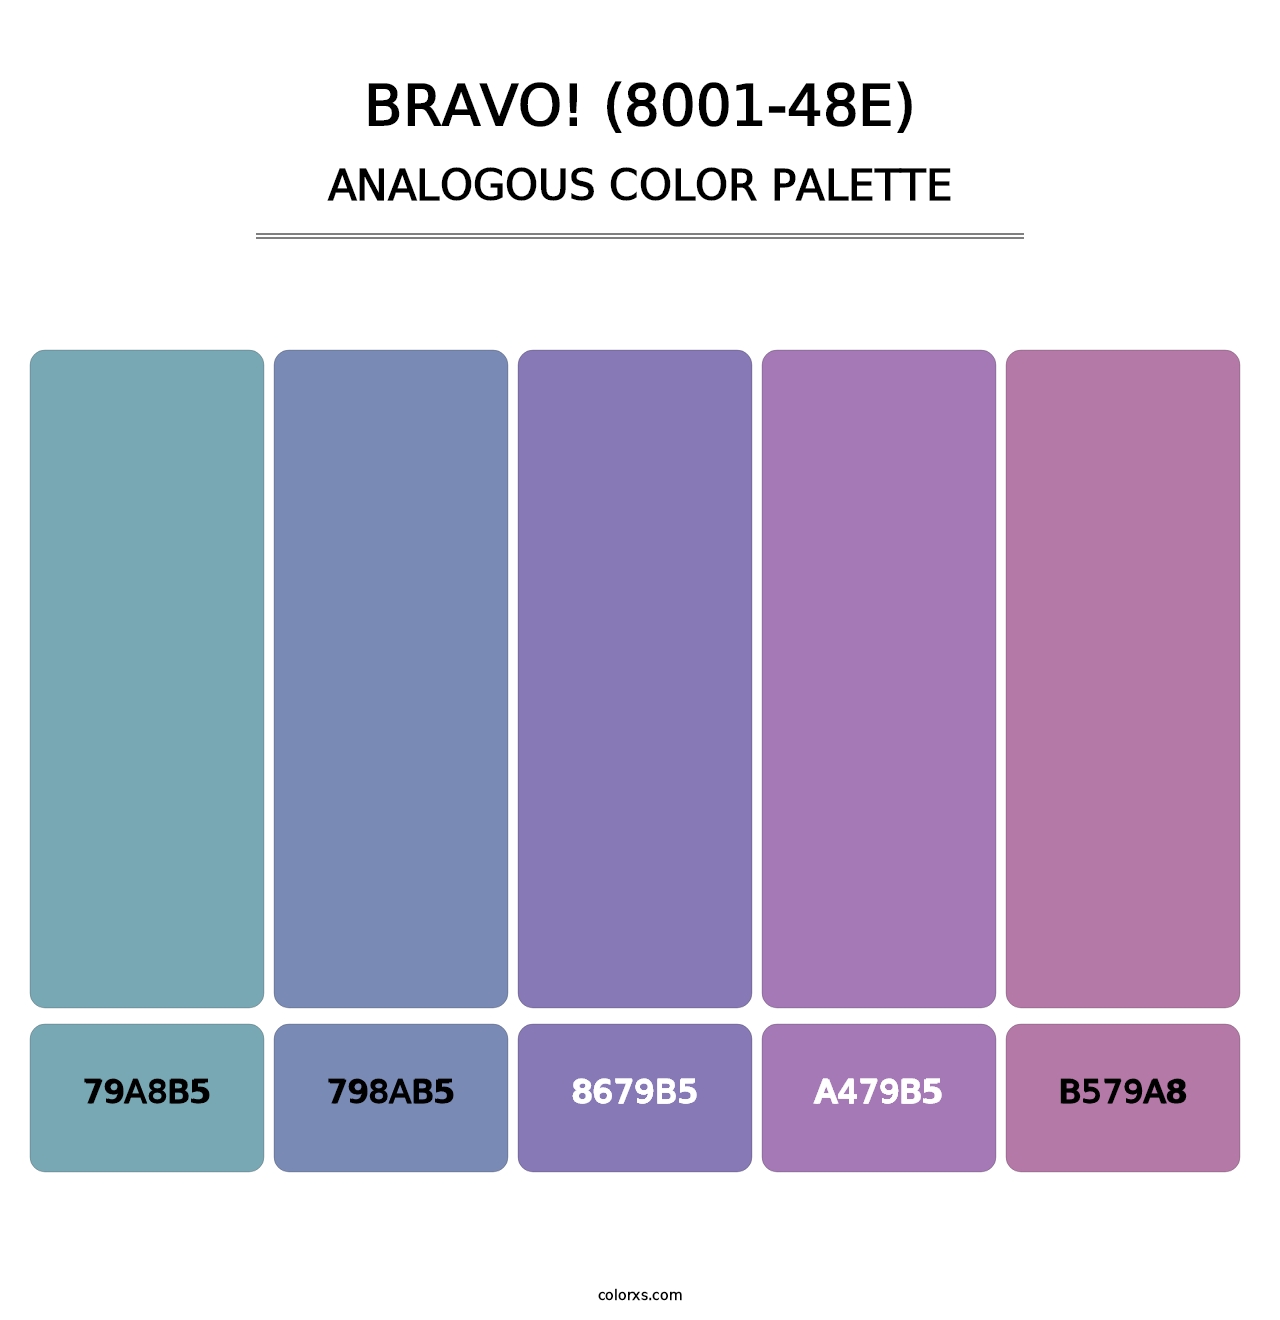 Bravo! (8001-48E) - Analogous Color Palette